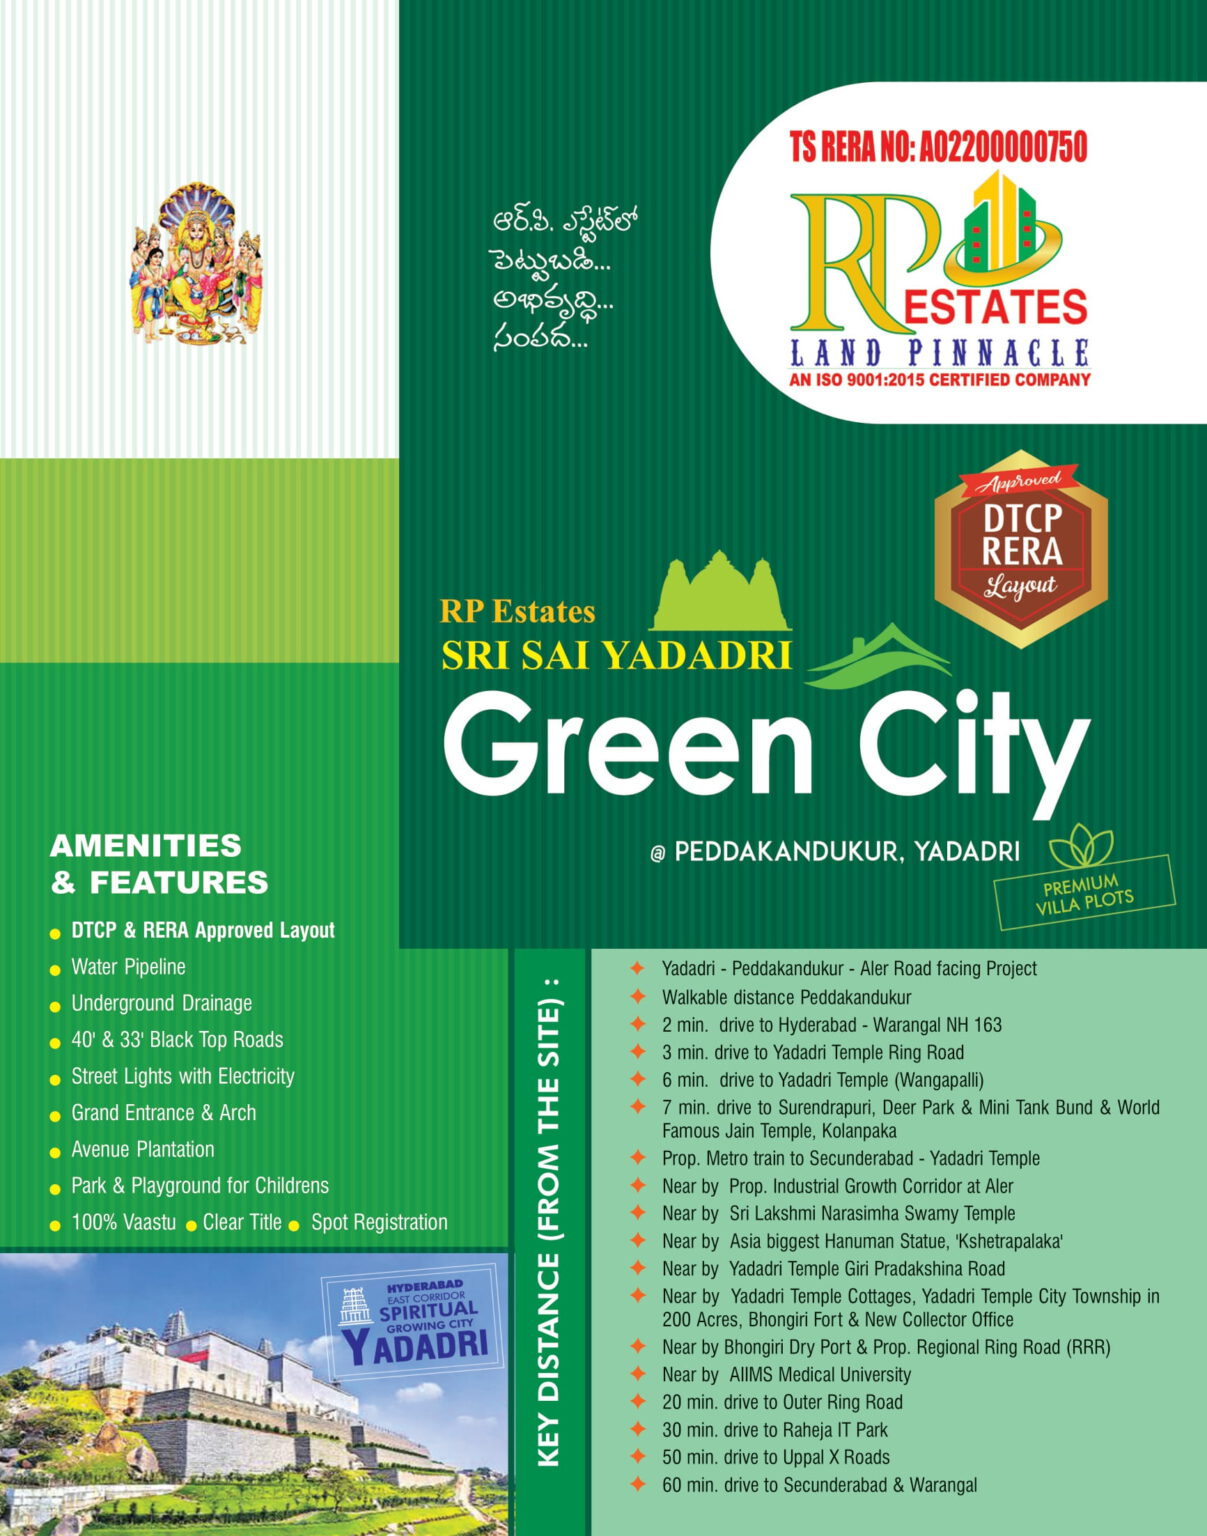 SRI SAI YADADRI GREEN CITY,RP Estates – Sri Sai Yadadri Green City,Peddakandukur, Telangana